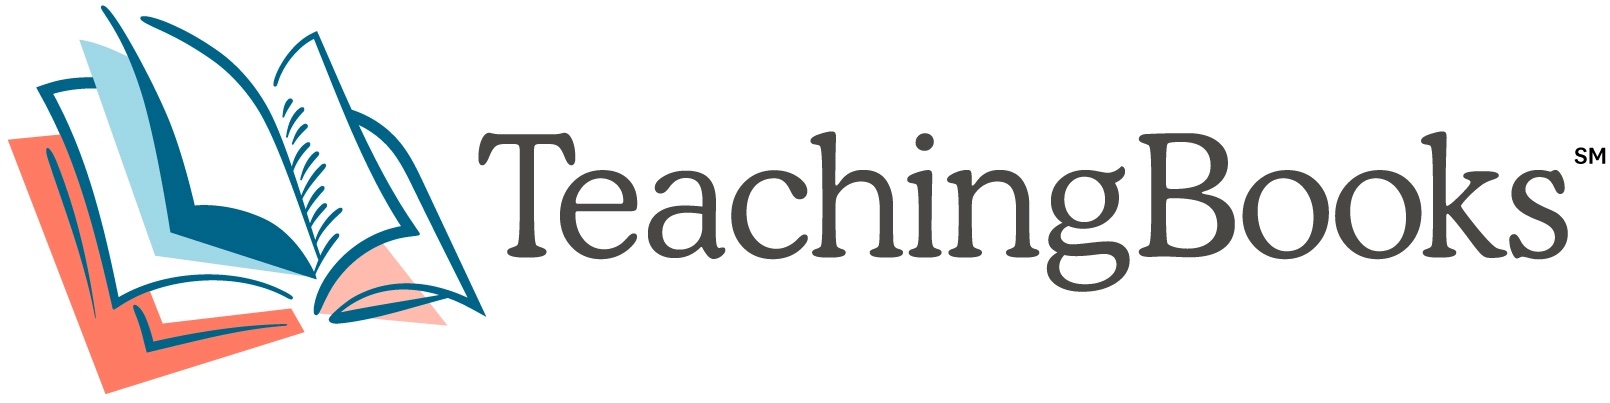 TeachingBooks.net link